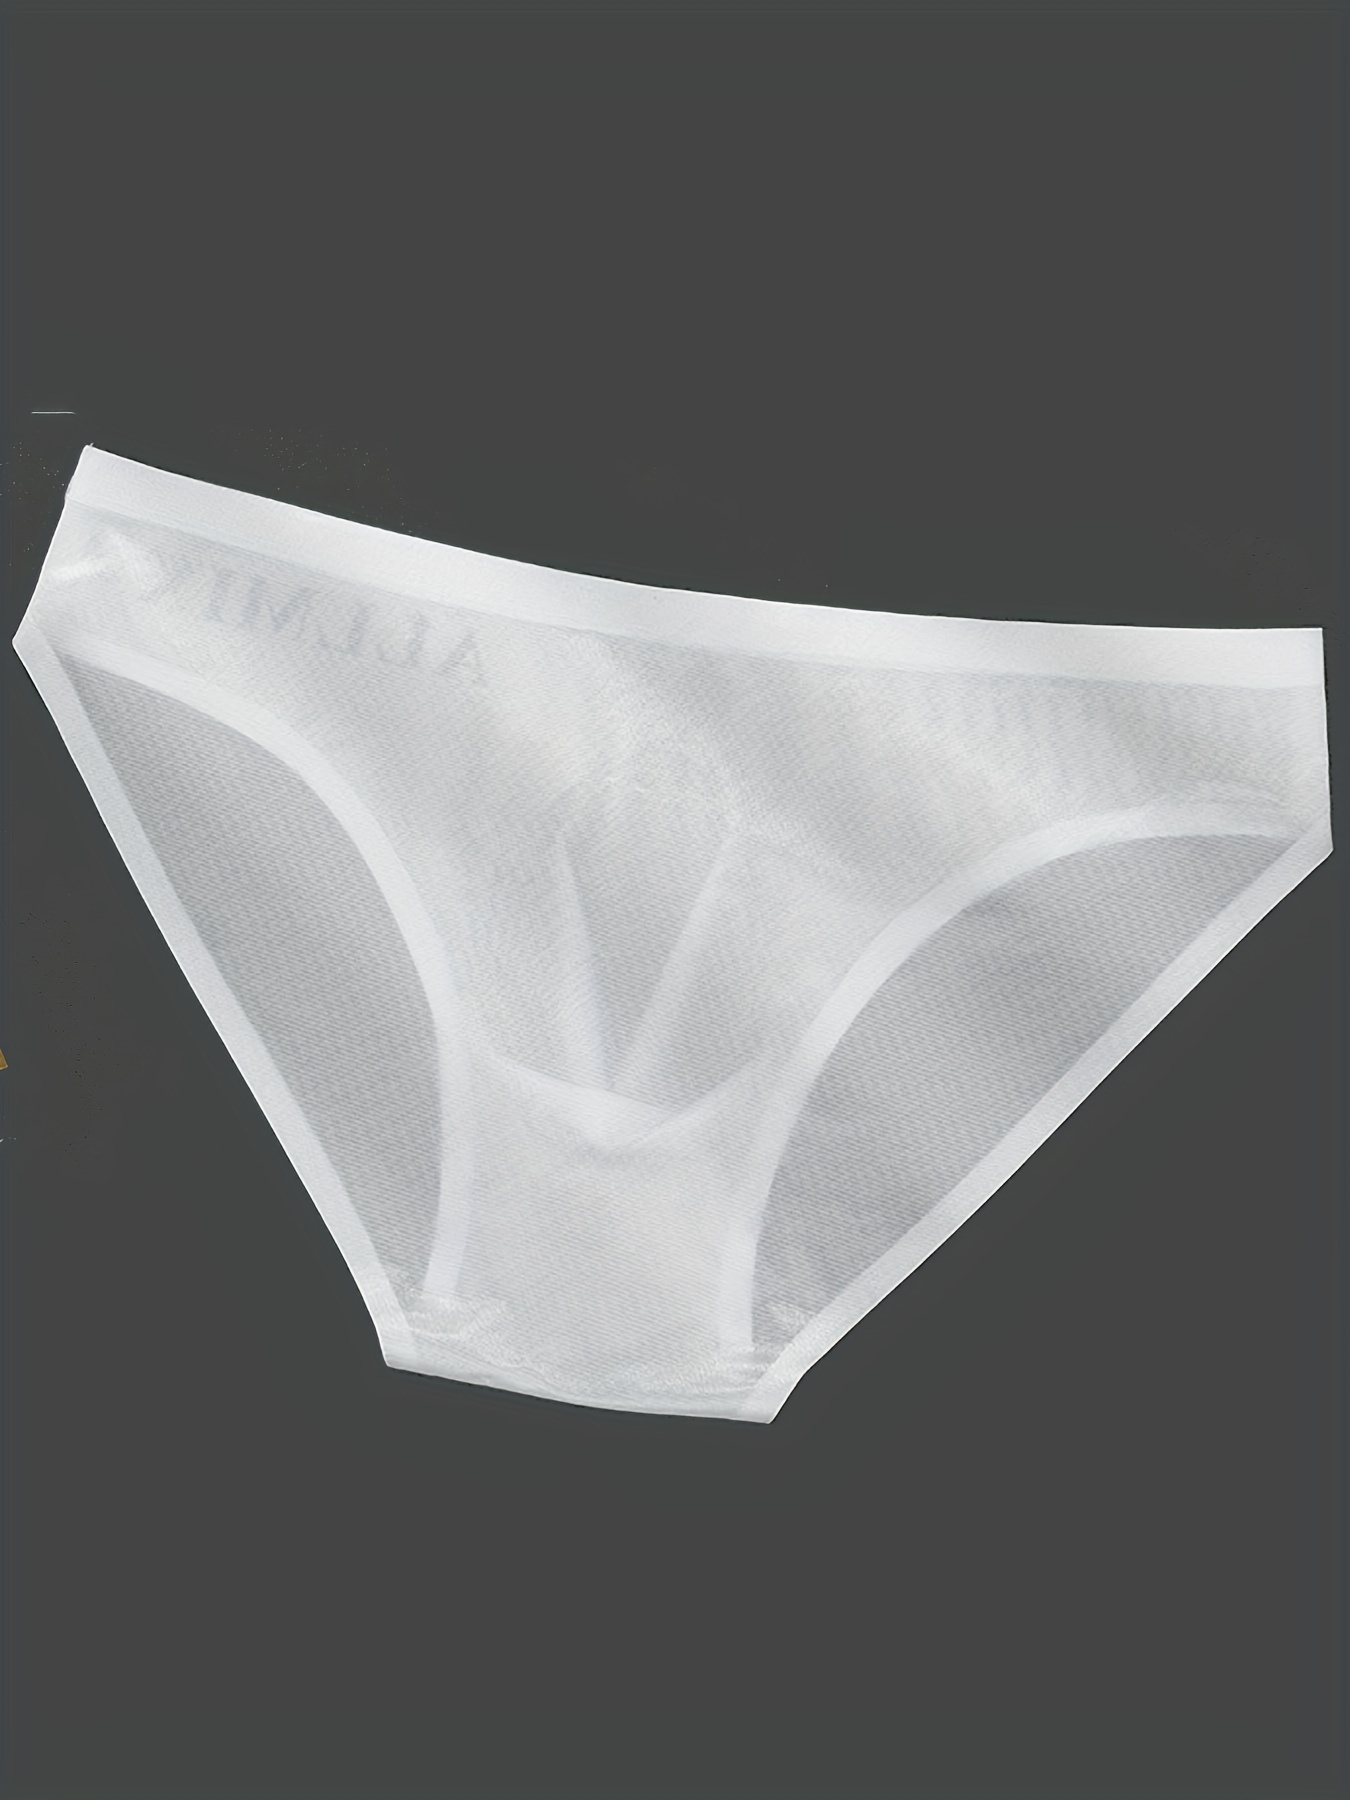 Men Seamless Low Waist Briefs Thin Underpants Underwear Panties